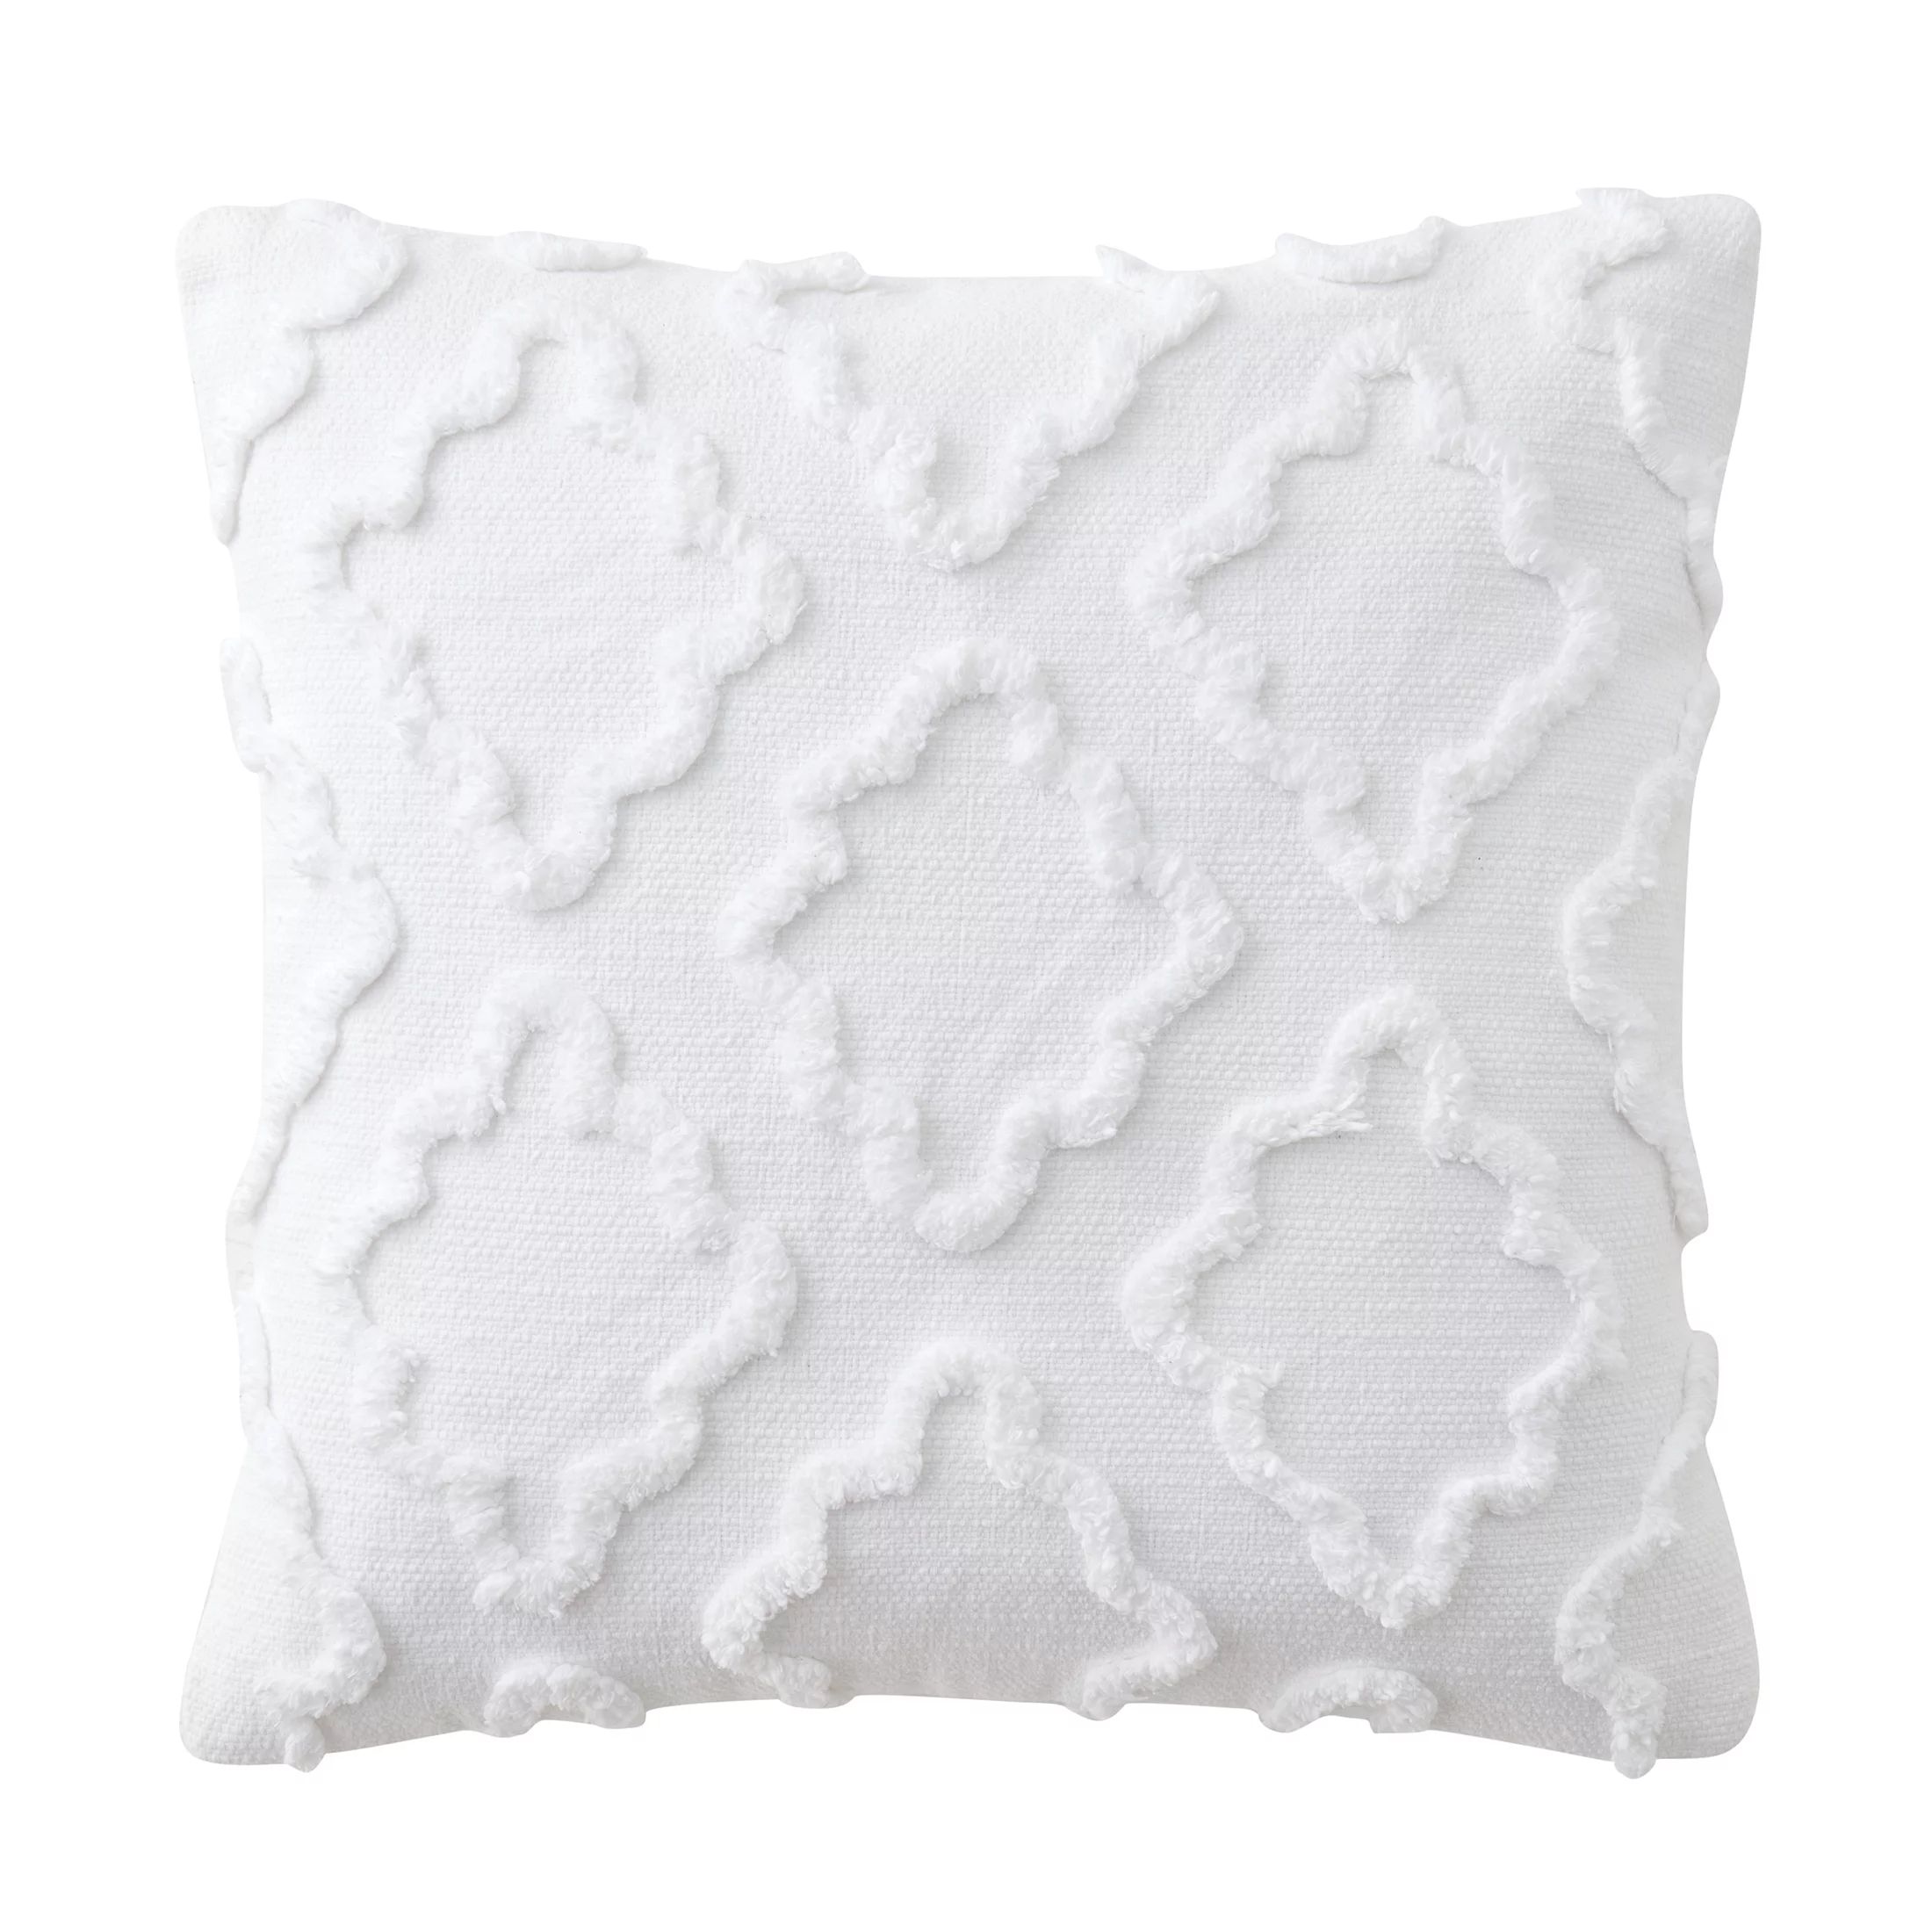 White Tufted Cotton Decorative Pillow Cover, Odessa, My Texas House, 20" x 20", 1 Piece | Walmart (US)